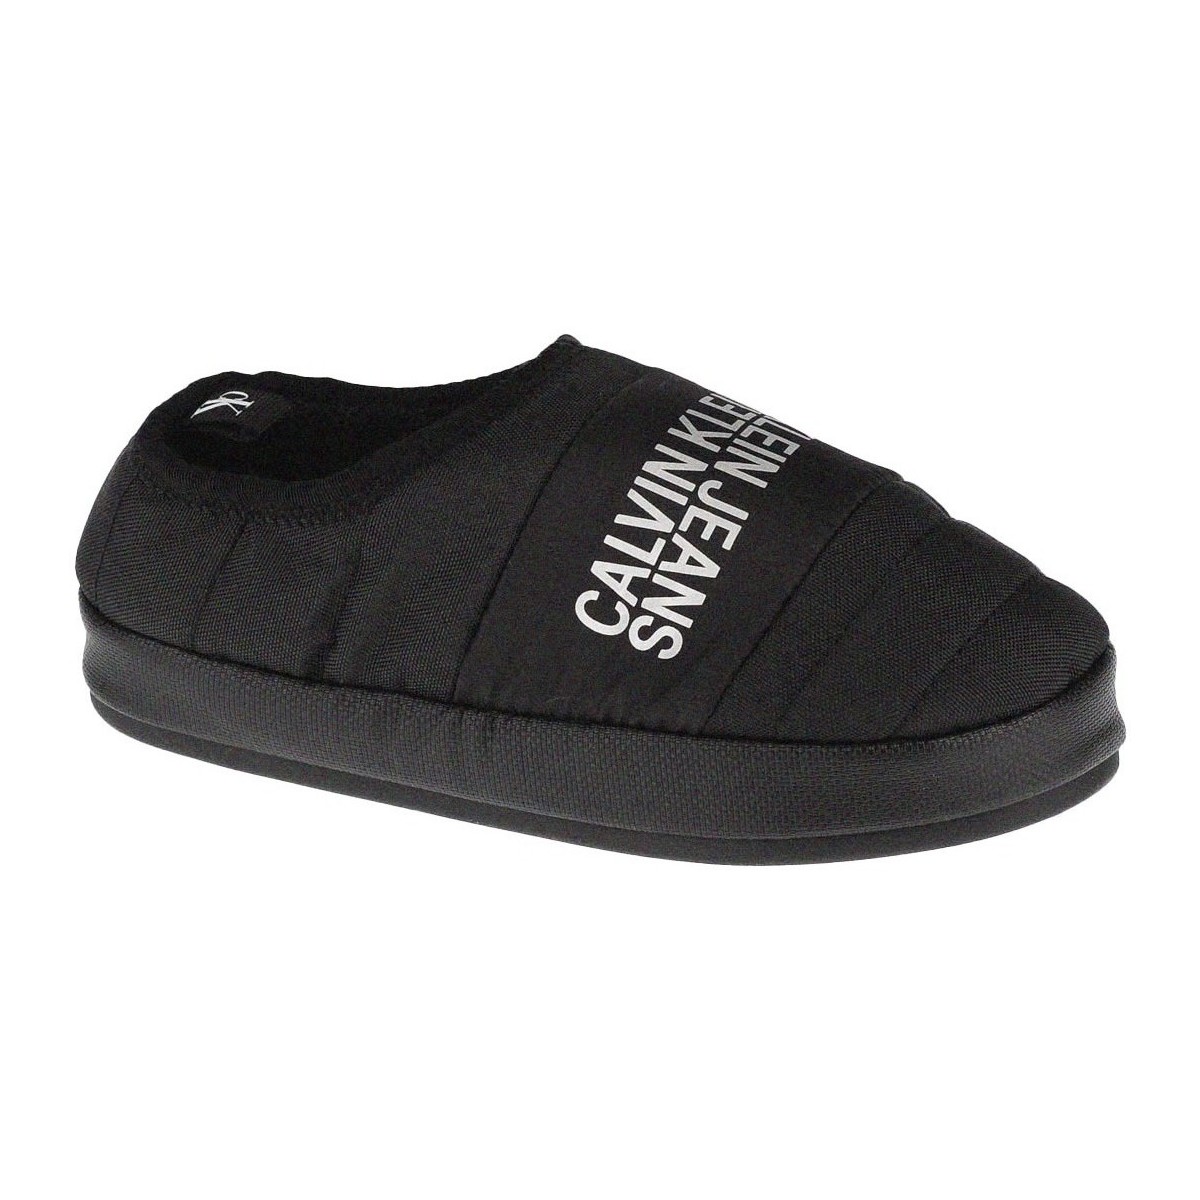 Sapatos Mulher Chinelos Calvin Klein Jeans Home Shoe Slipper W Warm Lining Preto